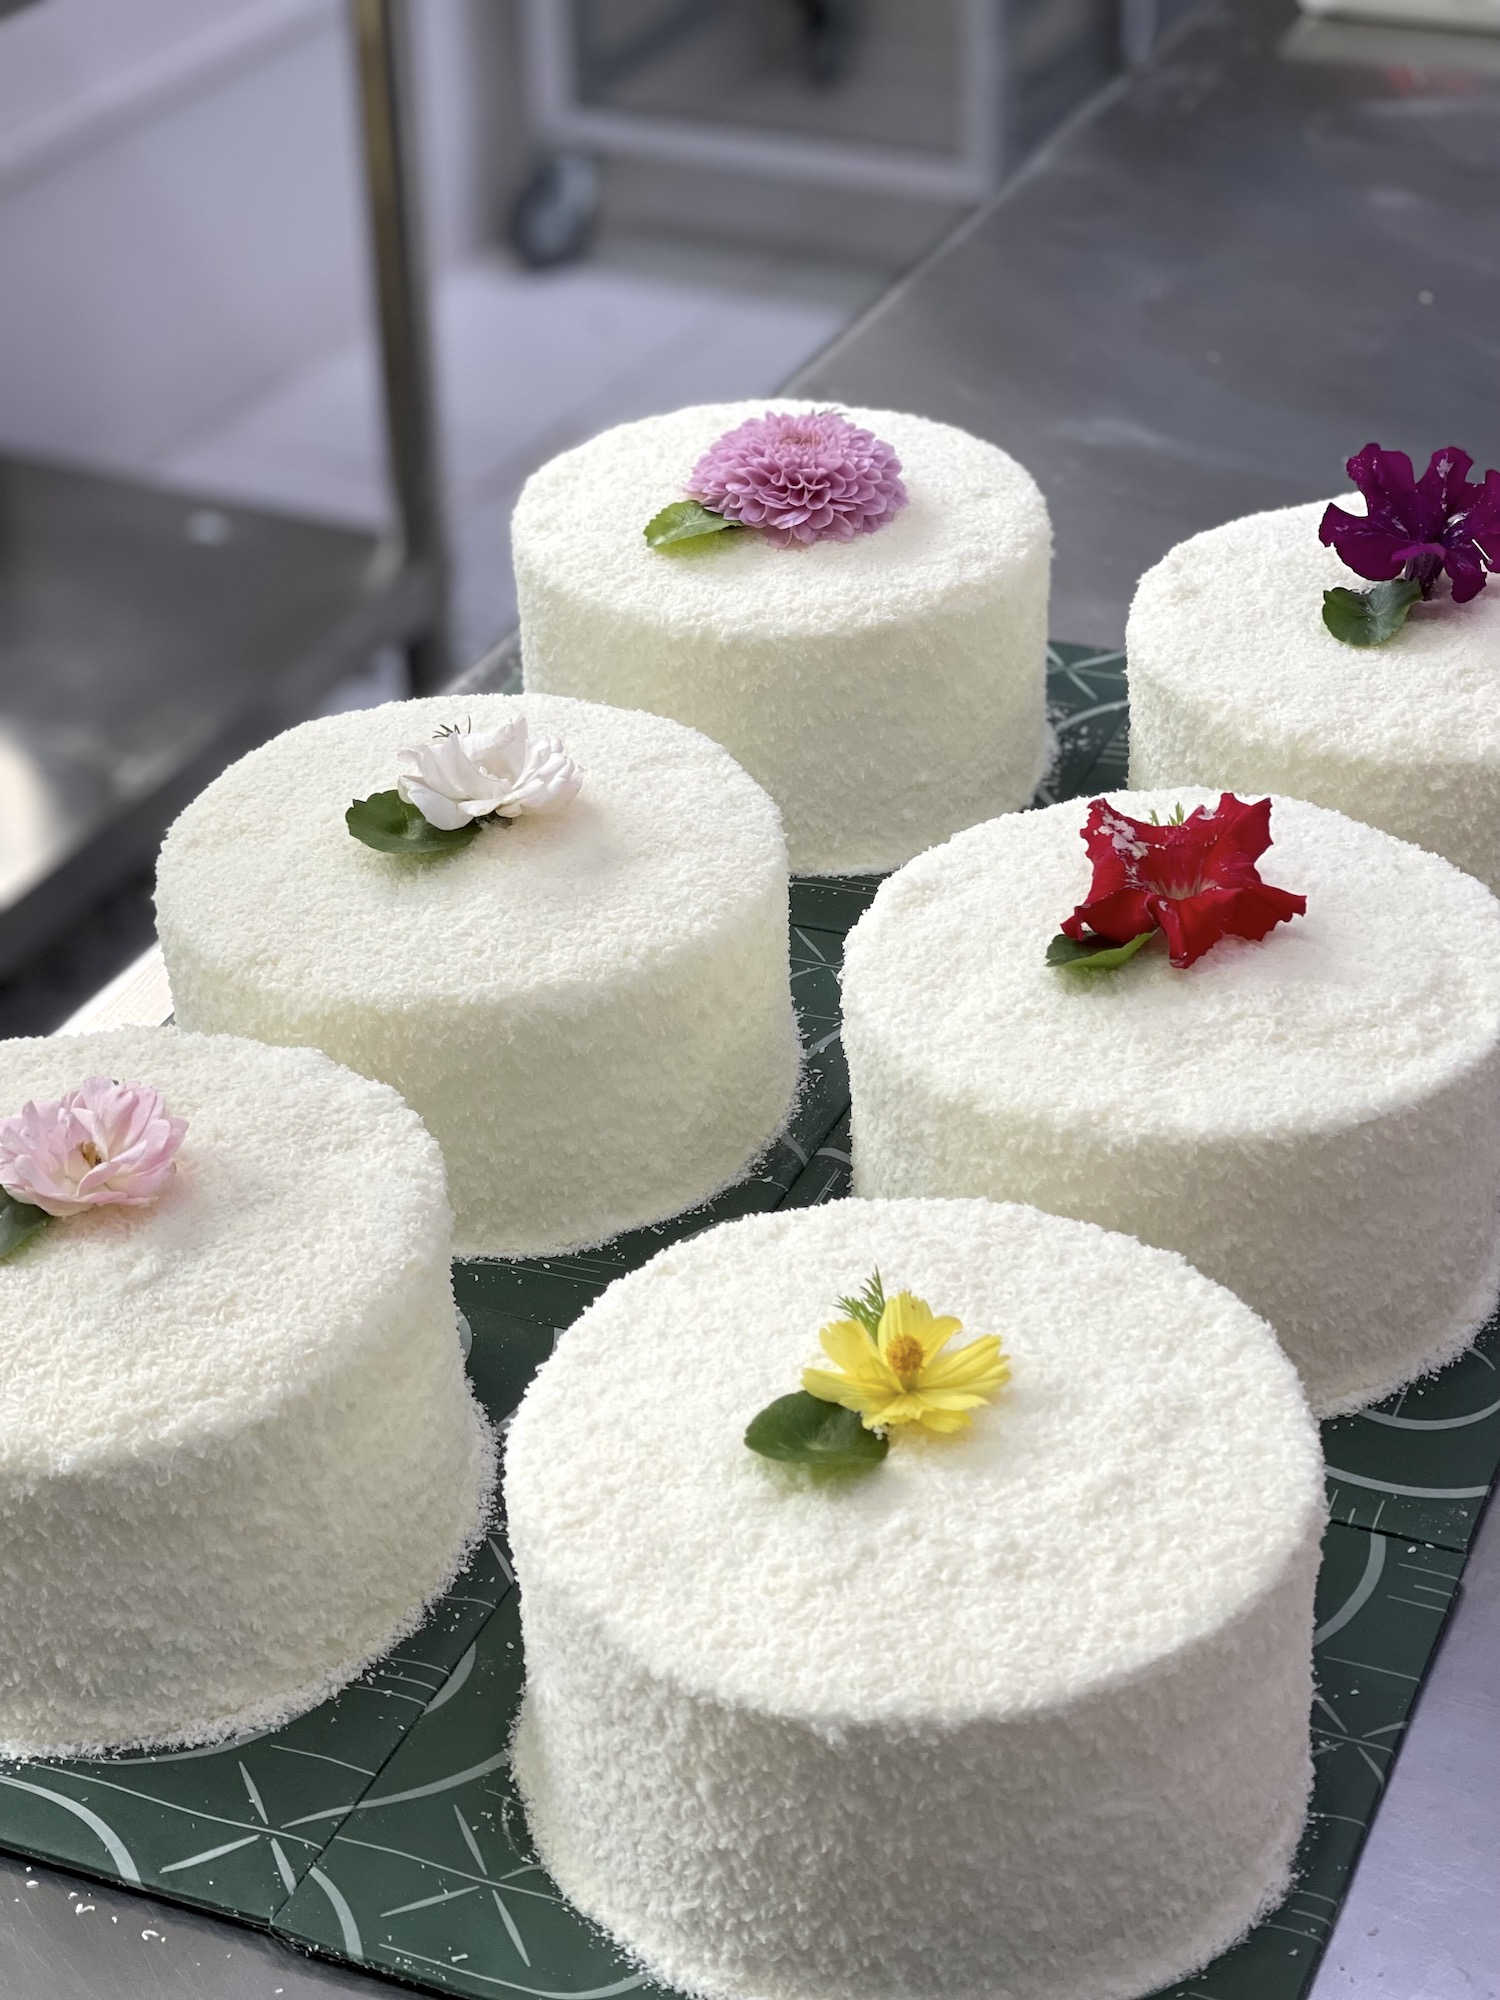 Buko pandan chiffon cakes with edible florals